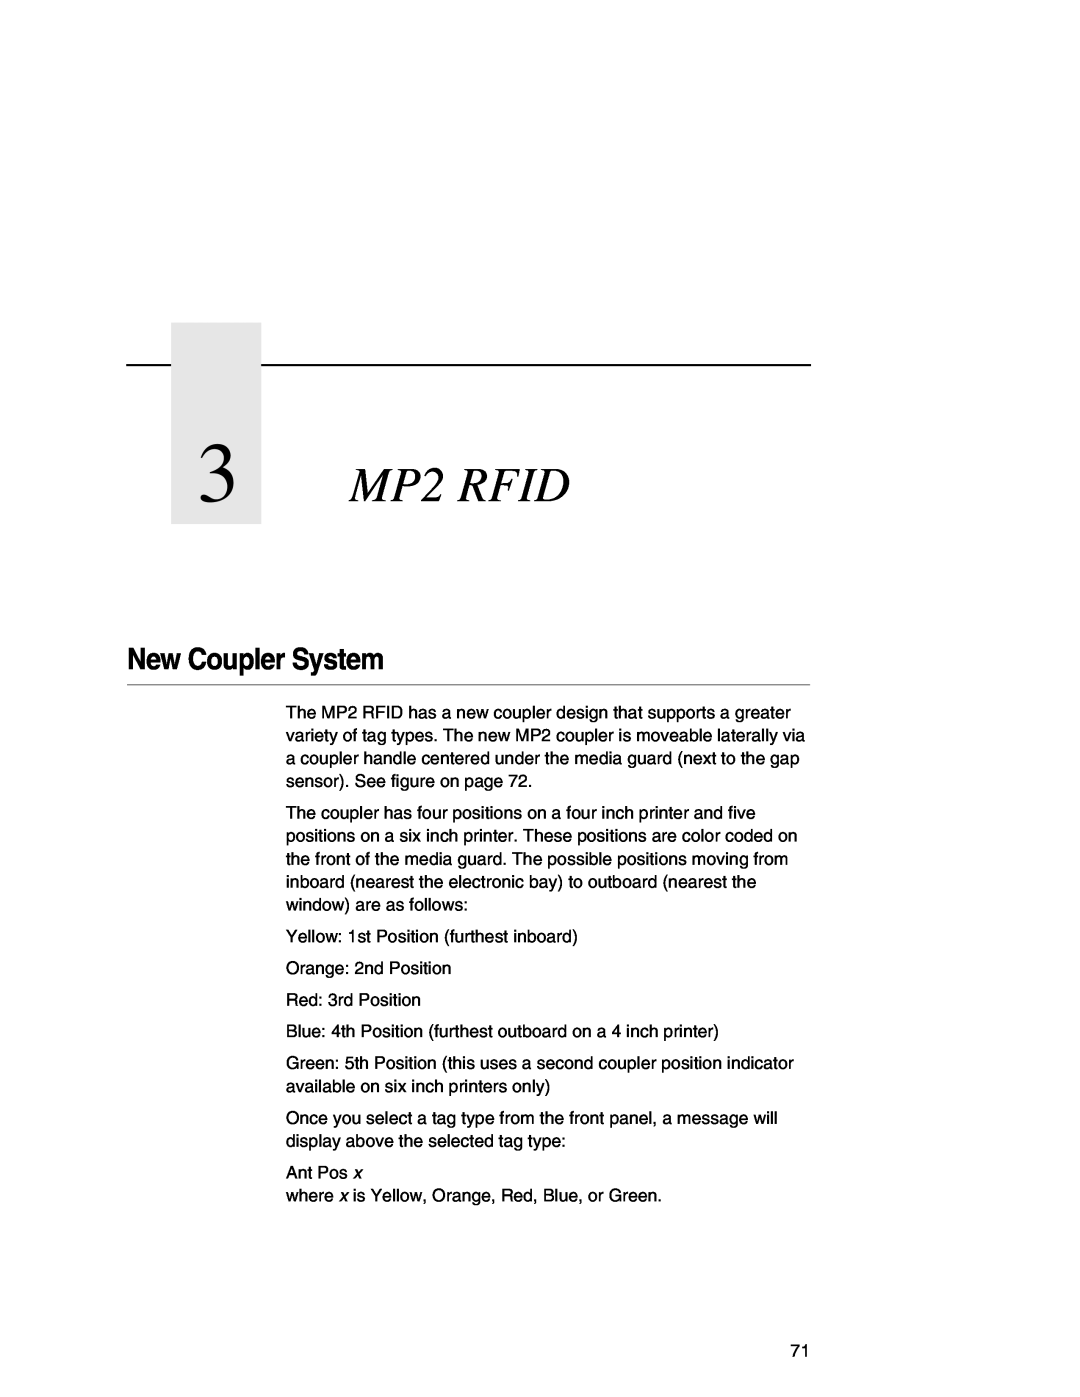 Printronix SL5000r MP manual 3 MP2 RFID, New Coupler System 